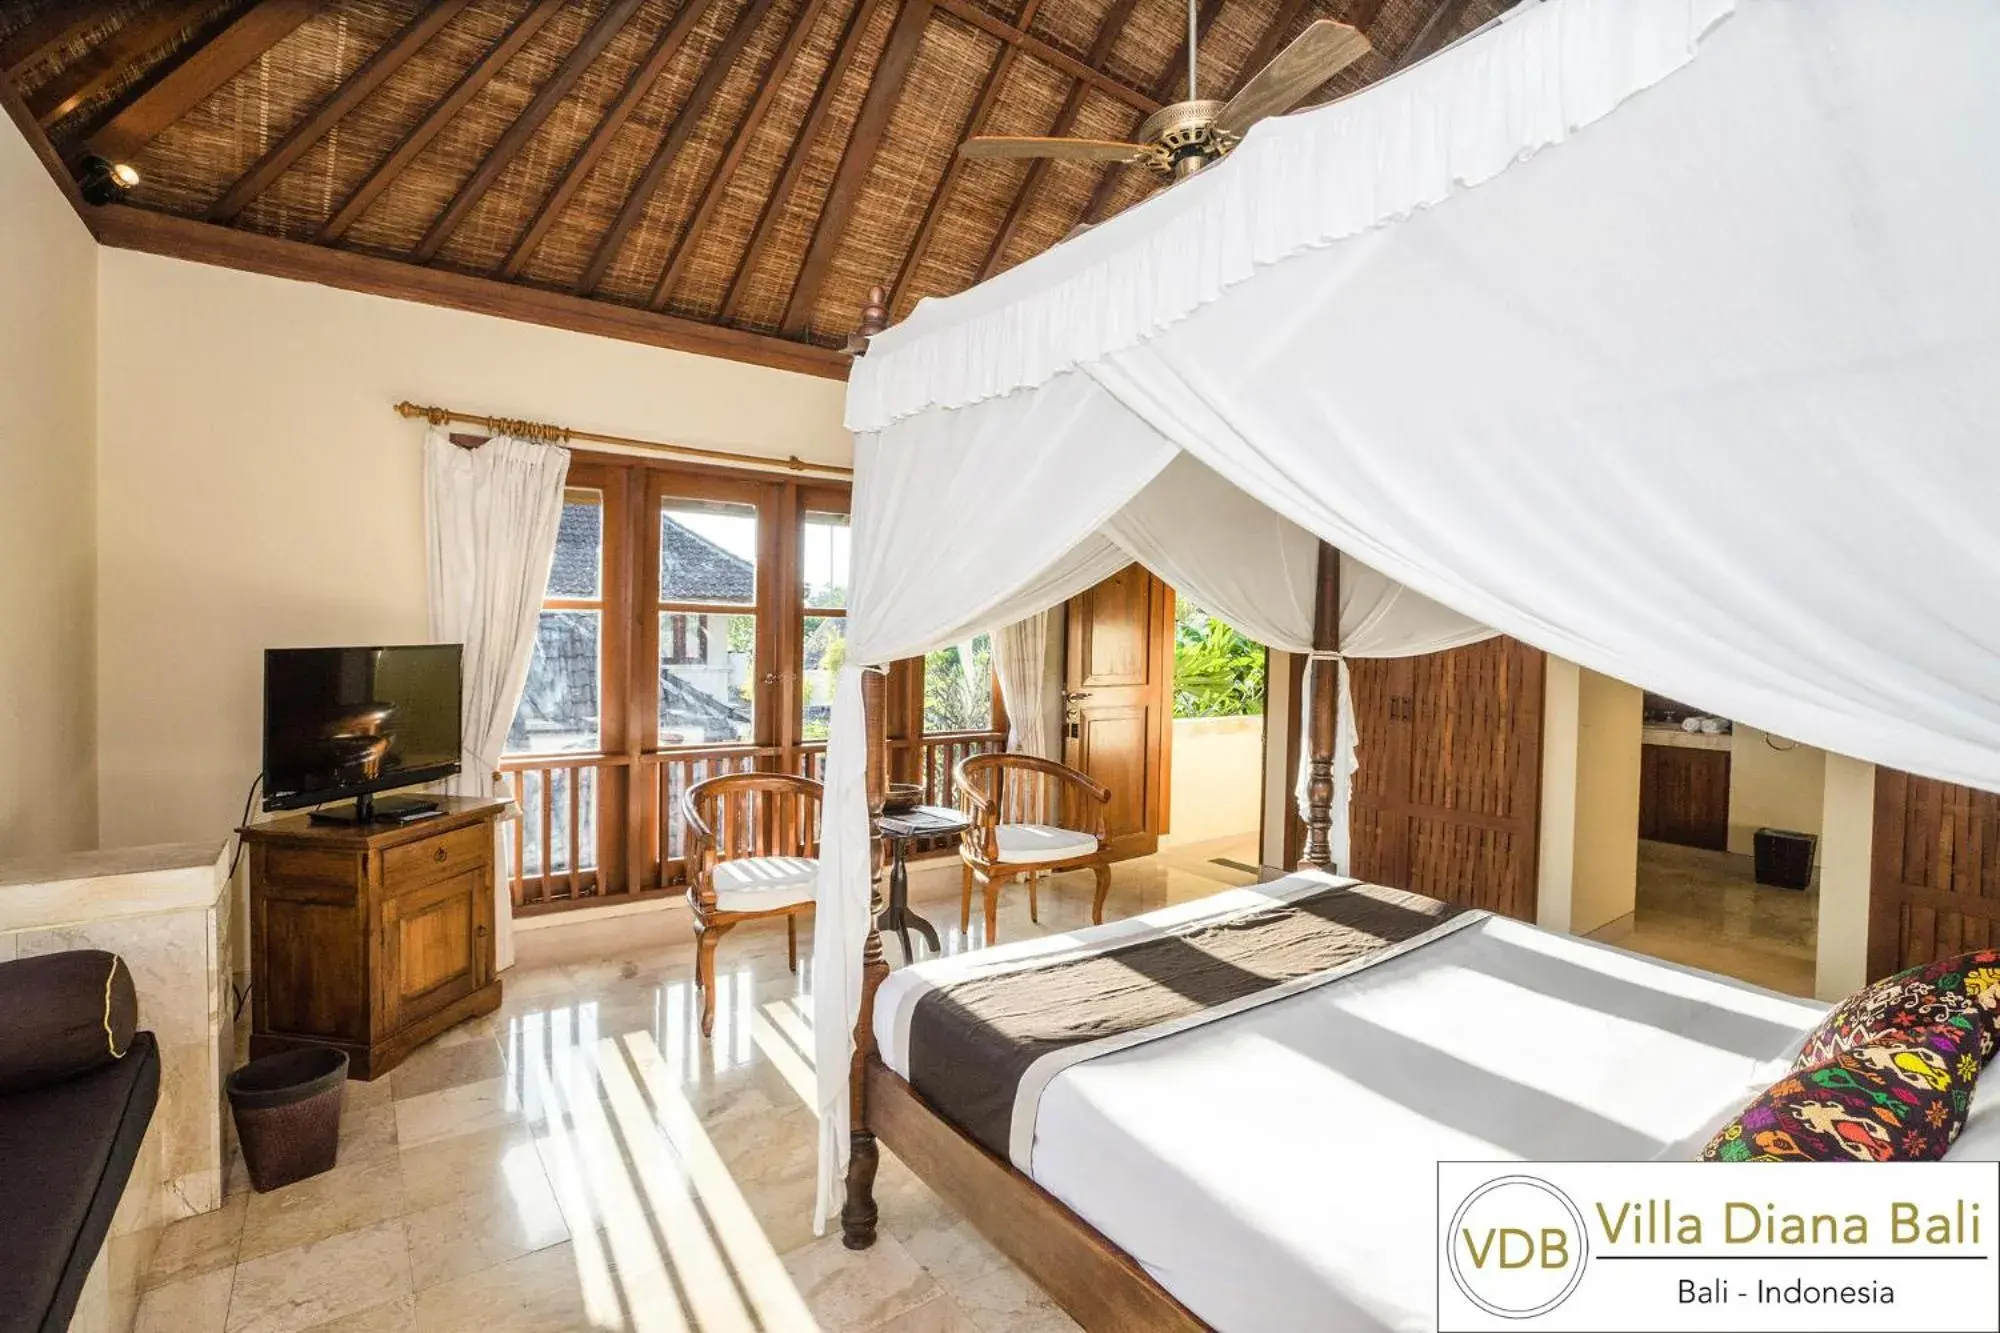 Bedroom in Villa Diana Bali